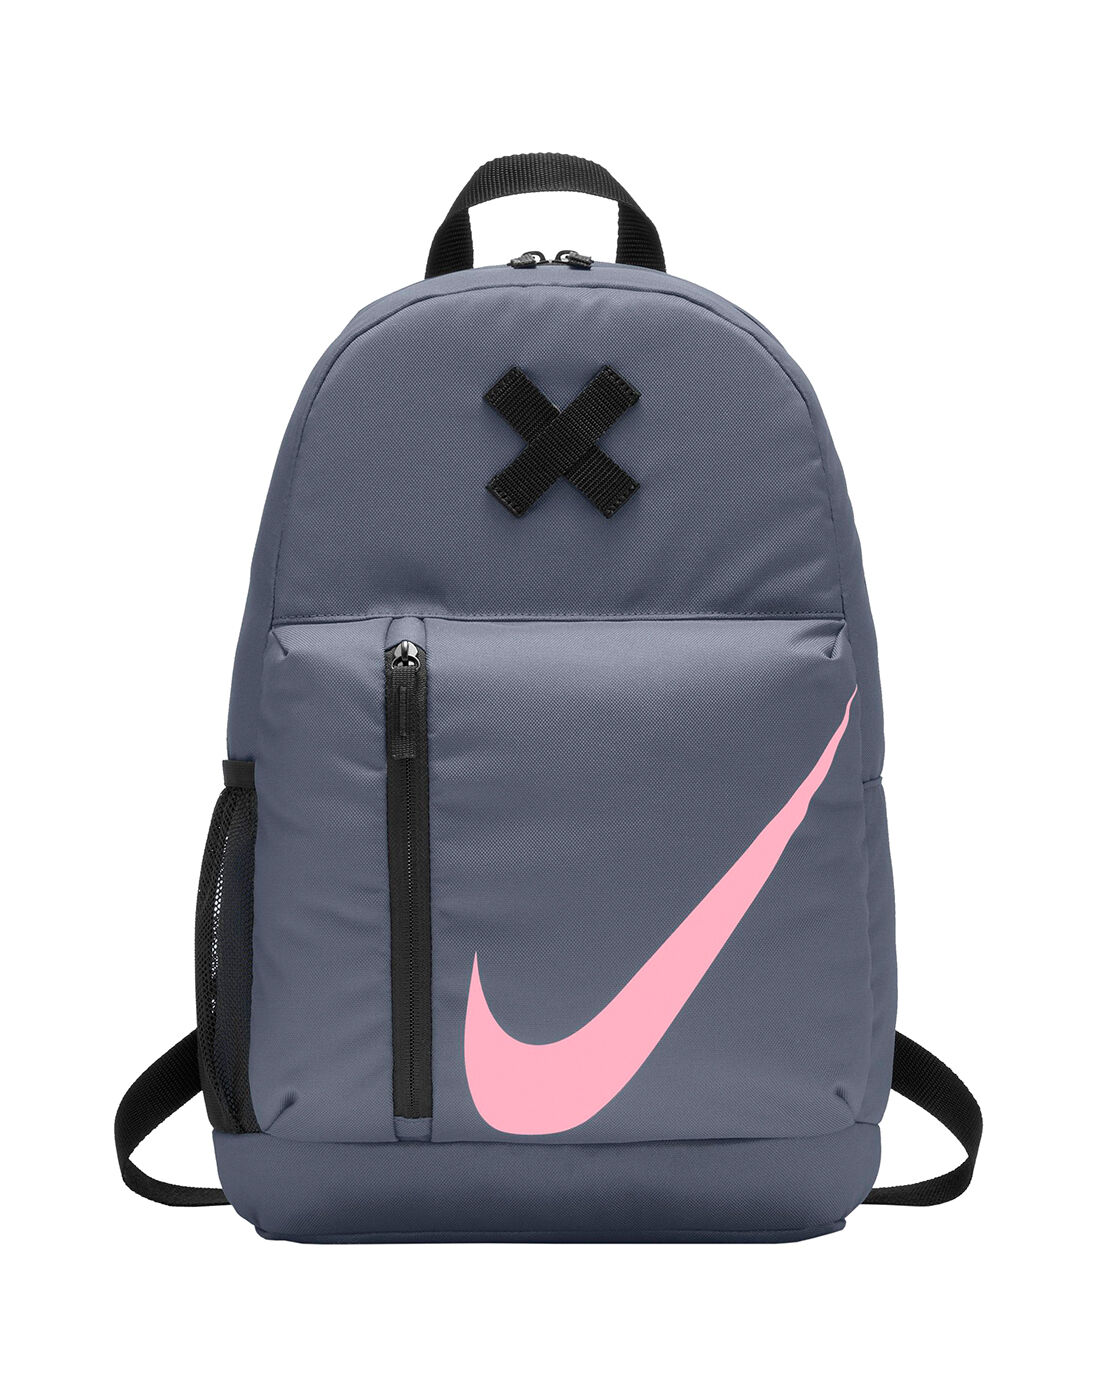 Grey \u0026 Pink Nike School Bag | Life 